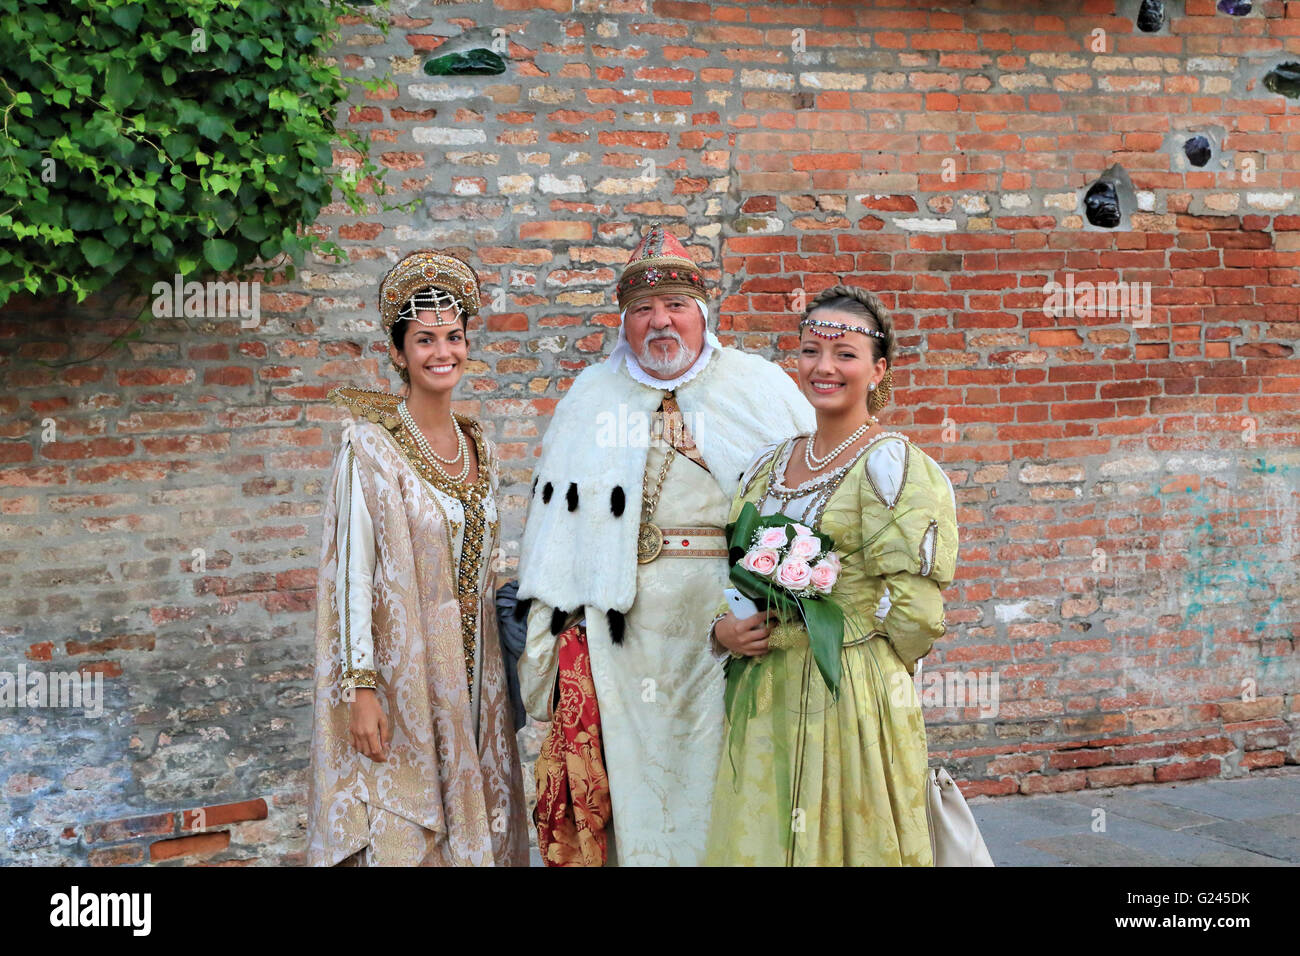 People in costume at Regata Storica di Venezia - Historical regatta in Venice 2015 Stock Photo